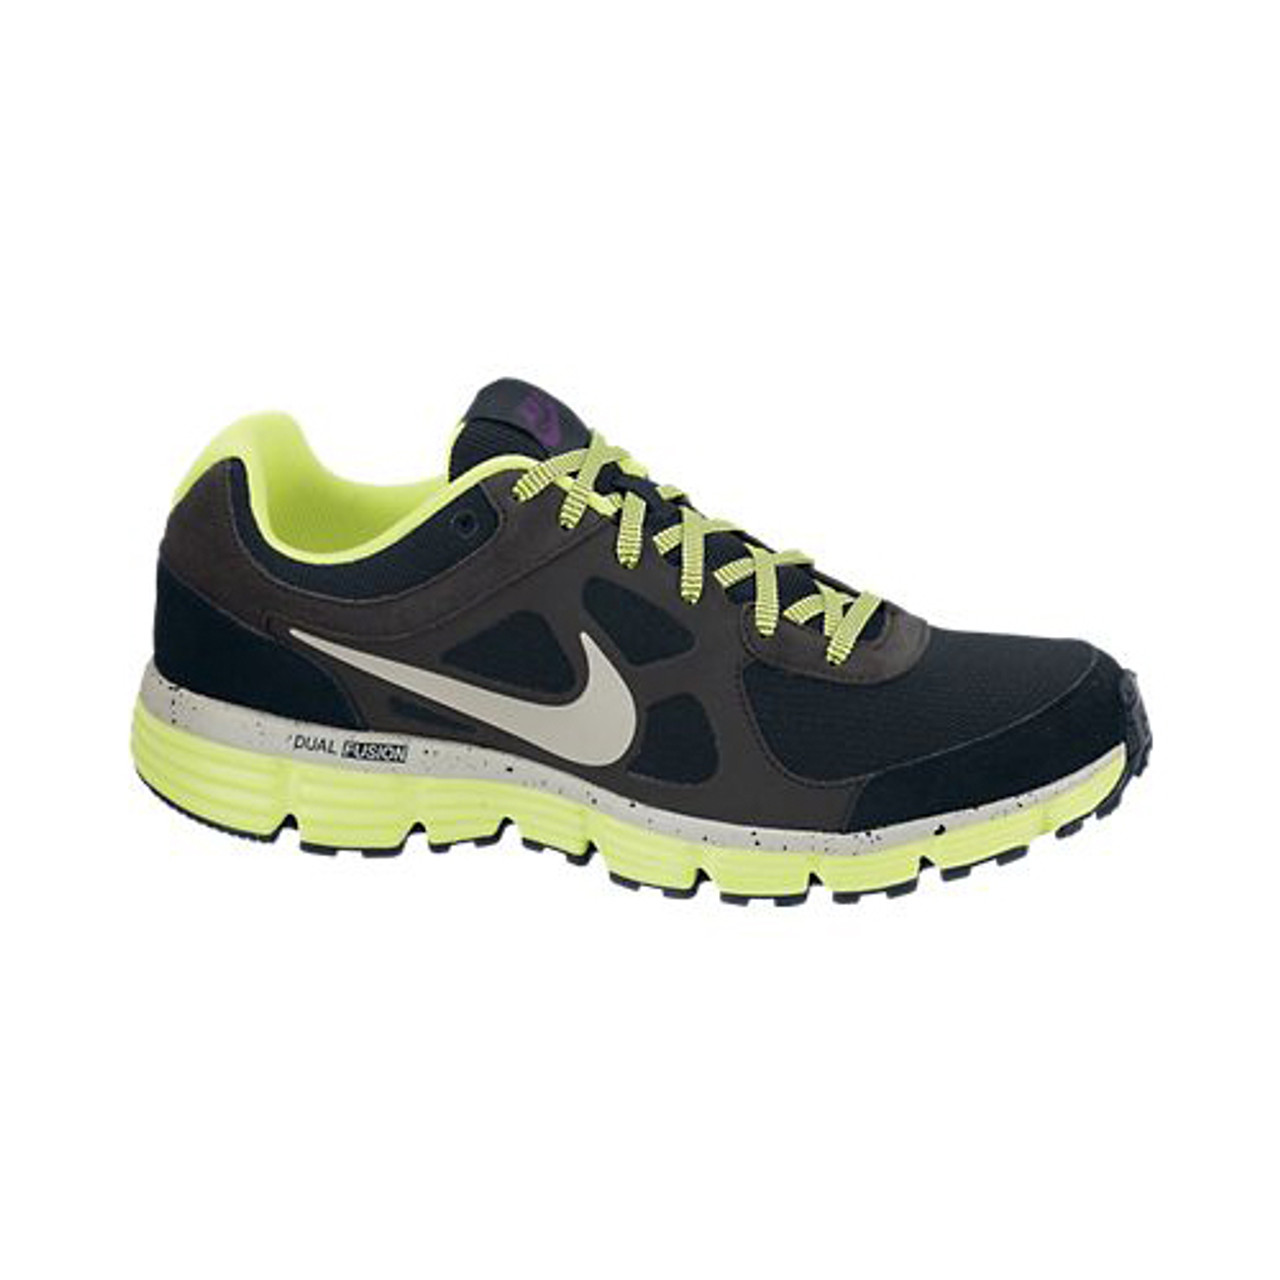 Nike Dual Fusion Forever Running Shoes - Black/Anthracite/Volt/Pale Grey | Discount Nike Men's Athletic & More - Shoolu.com | Shoolu.com